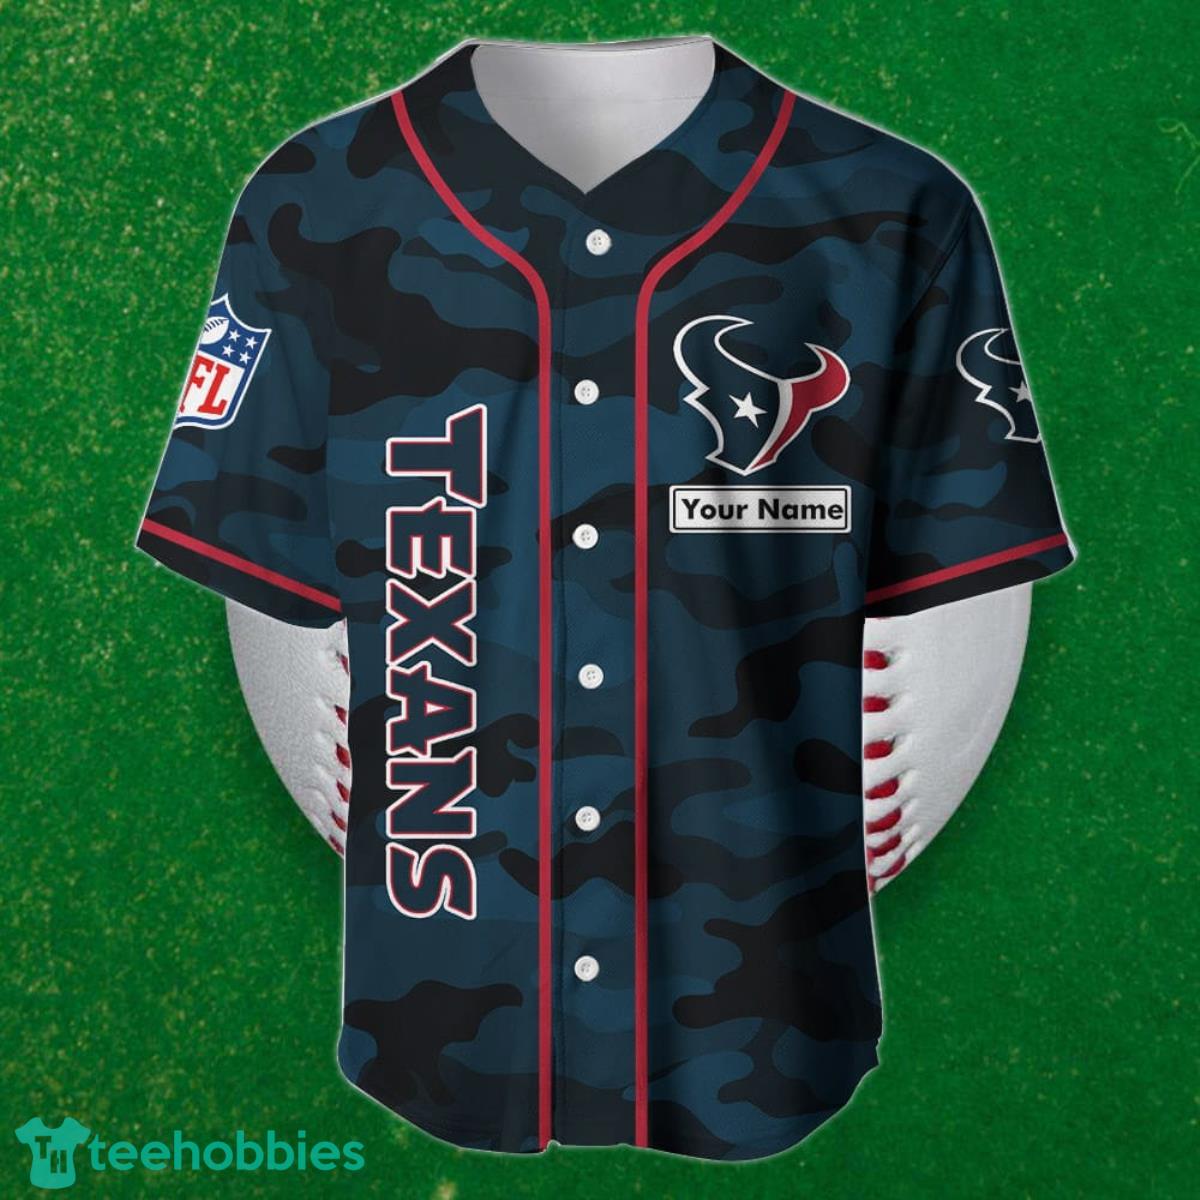 Texas Rangers Custom Name & Number Baseball Jersey Shirt Best Gift